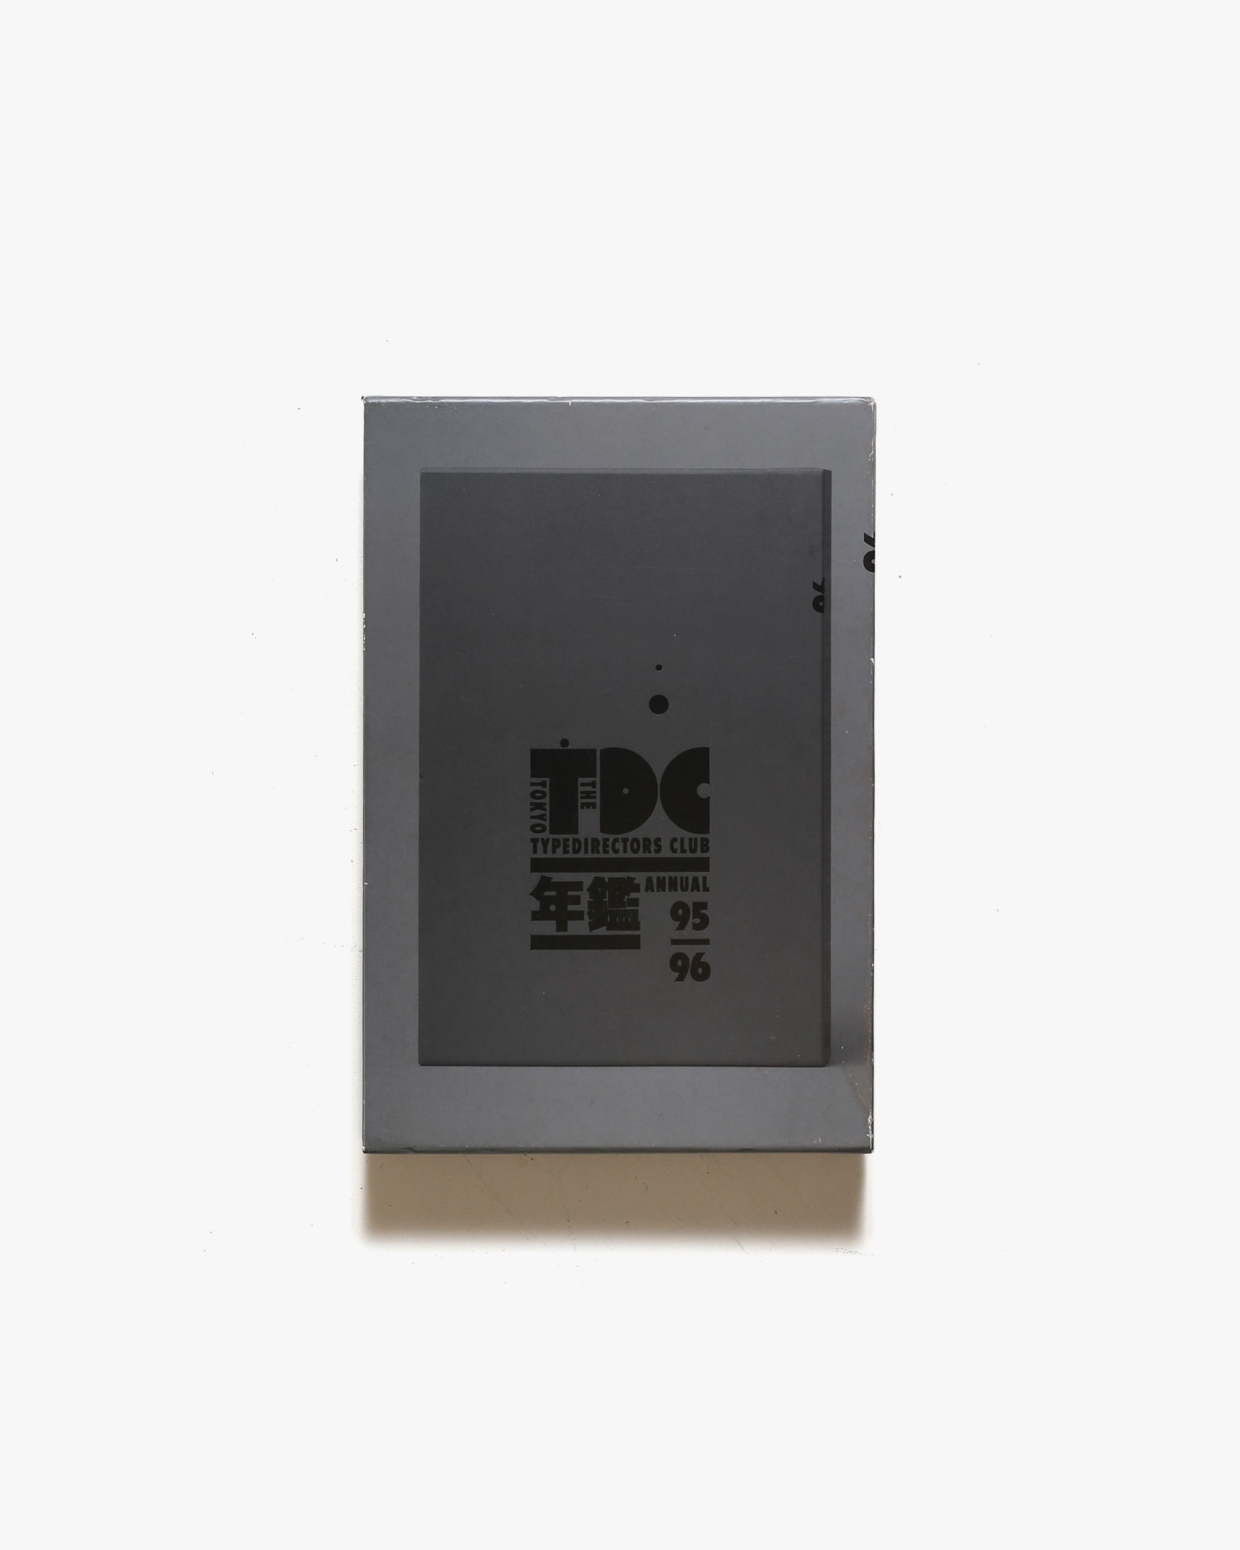 TDC年鑑 1995-96 |  東京タイポディレクターズクラブ